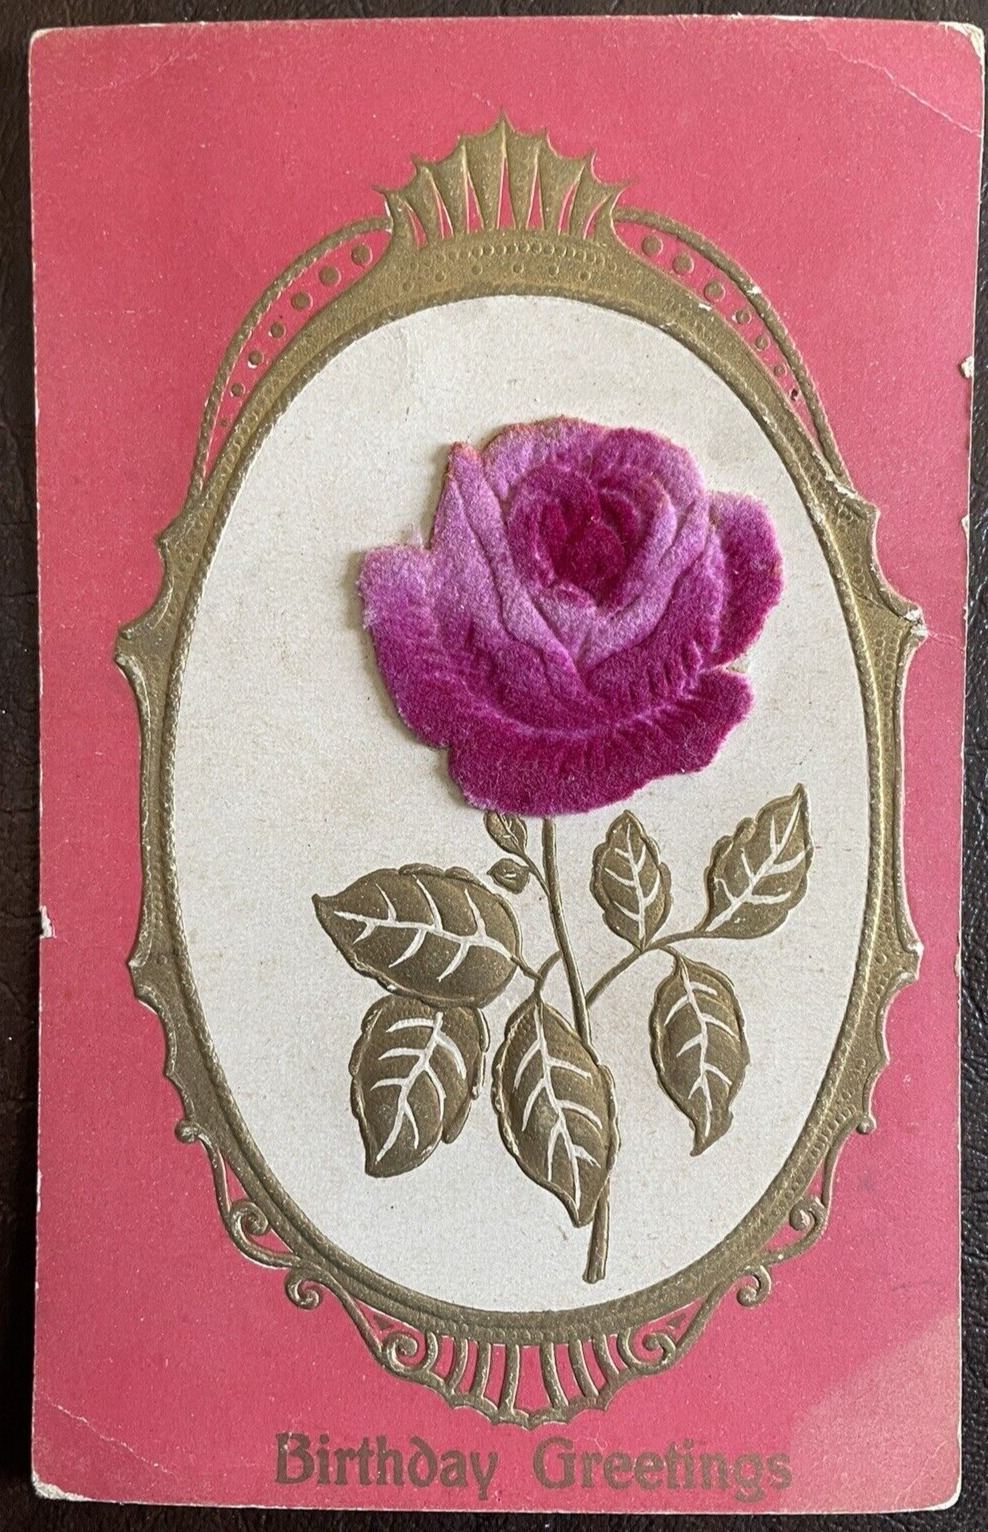 Postcard Vintage Birthday Greetings Embossed with Fabric Rose